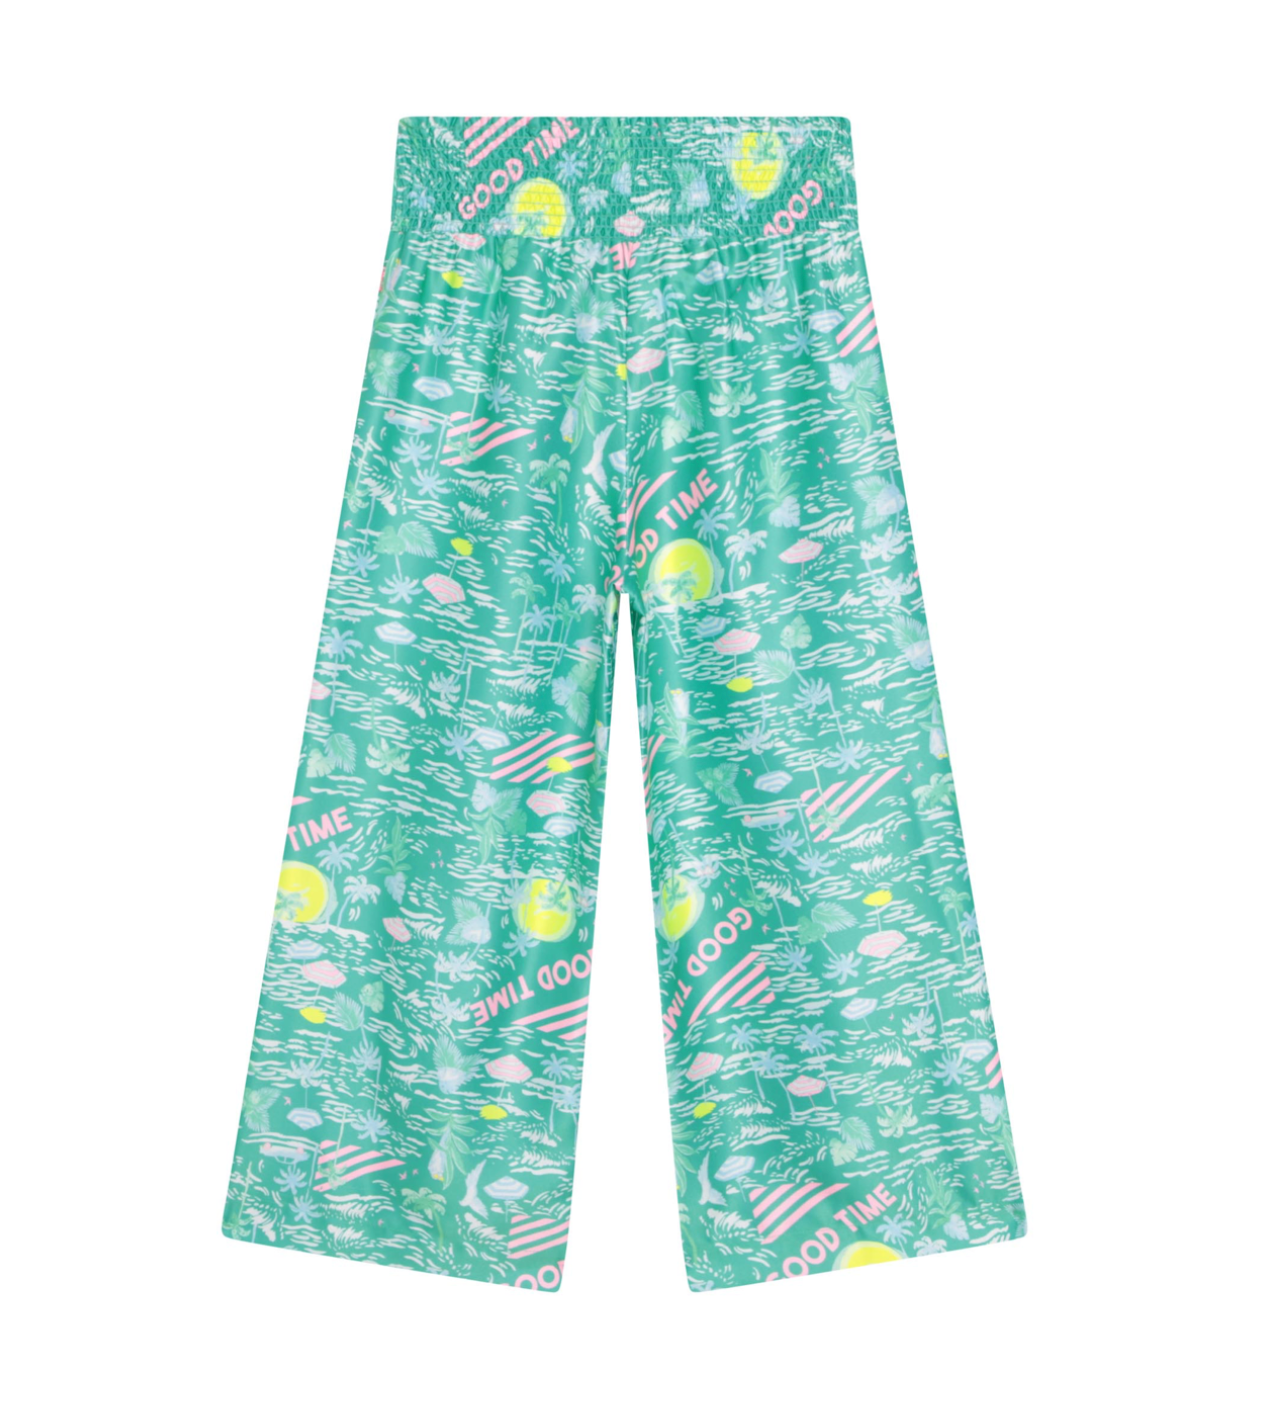 BILLIE BLUSH - Pantalon en satin vert motifs palmiers - 3 ans